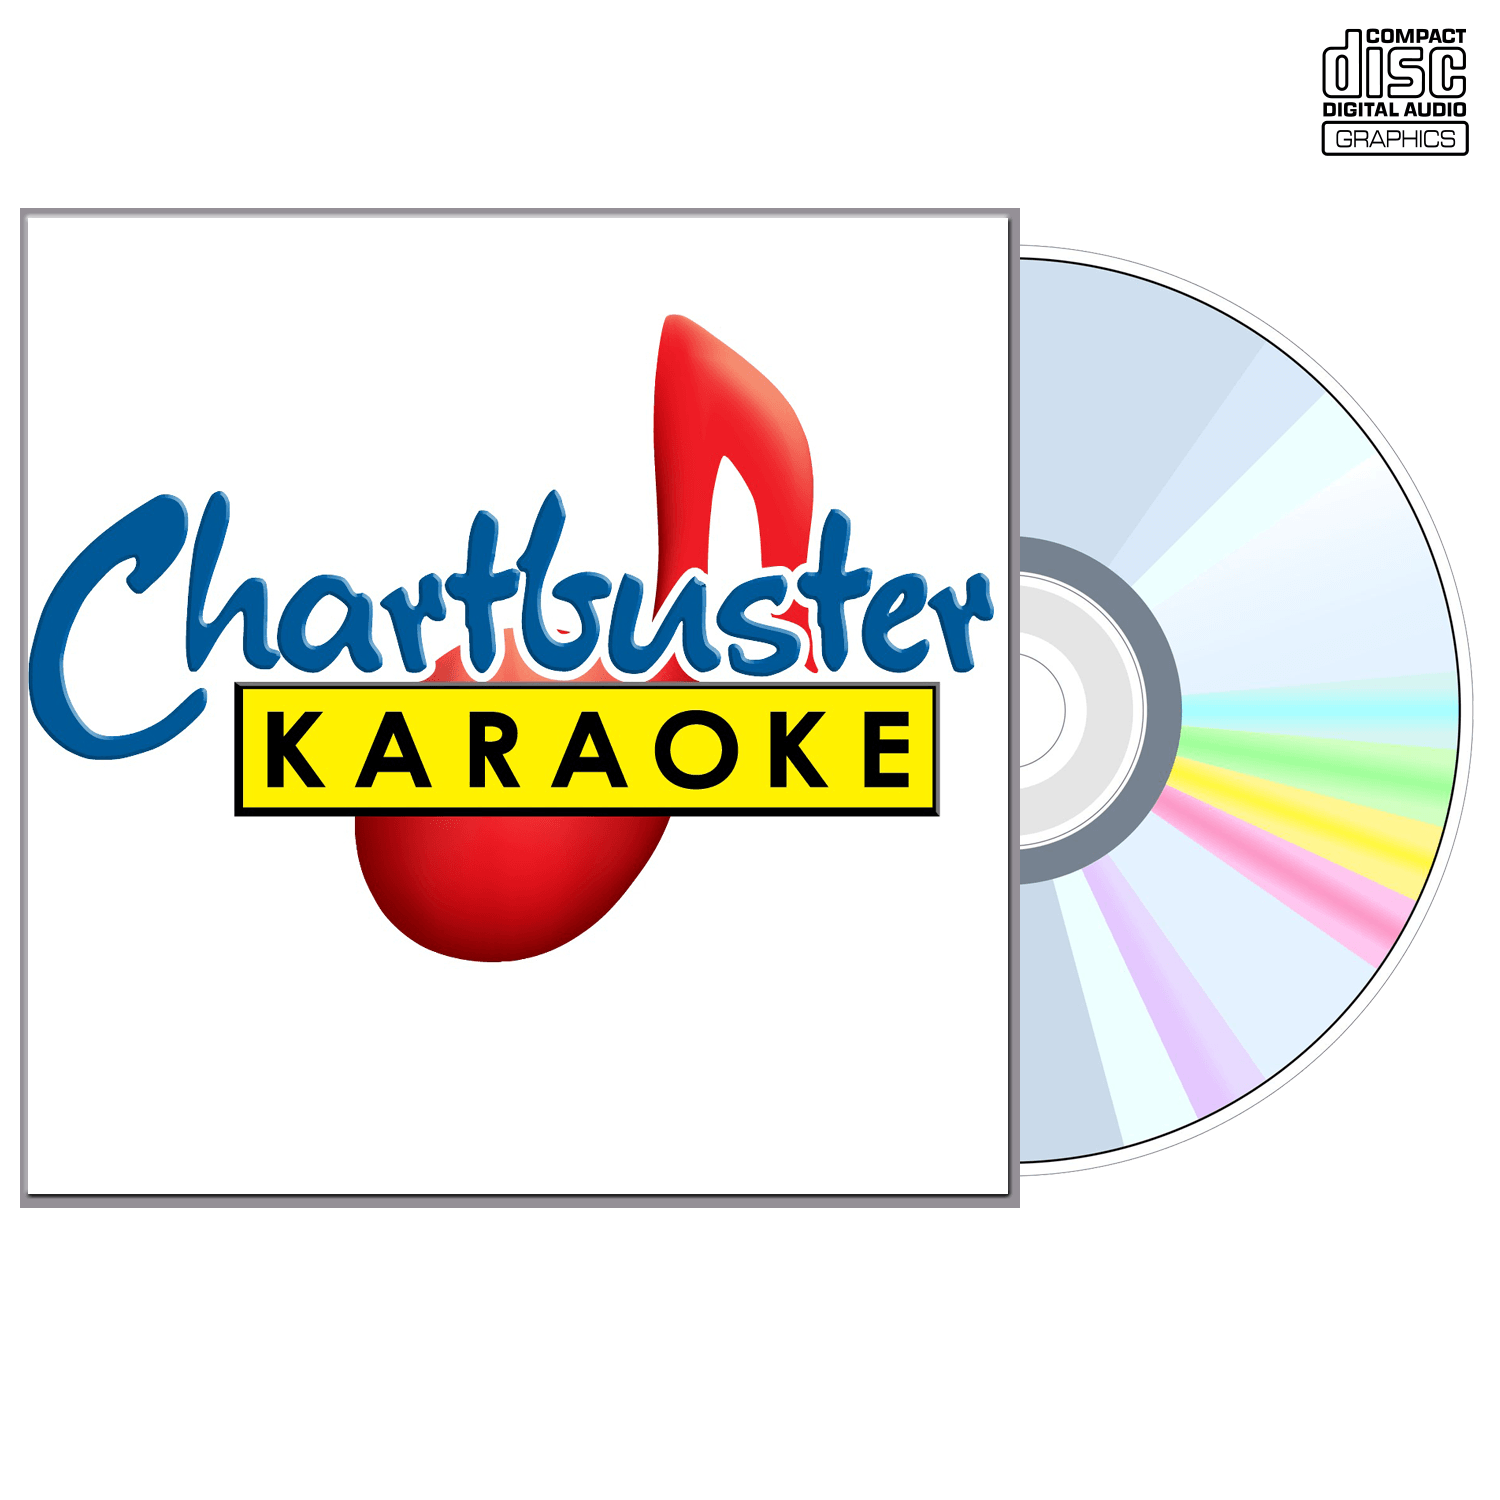 Plus One - CD+G - Chartbuster Karaoke - Karaoke Home Entertainment